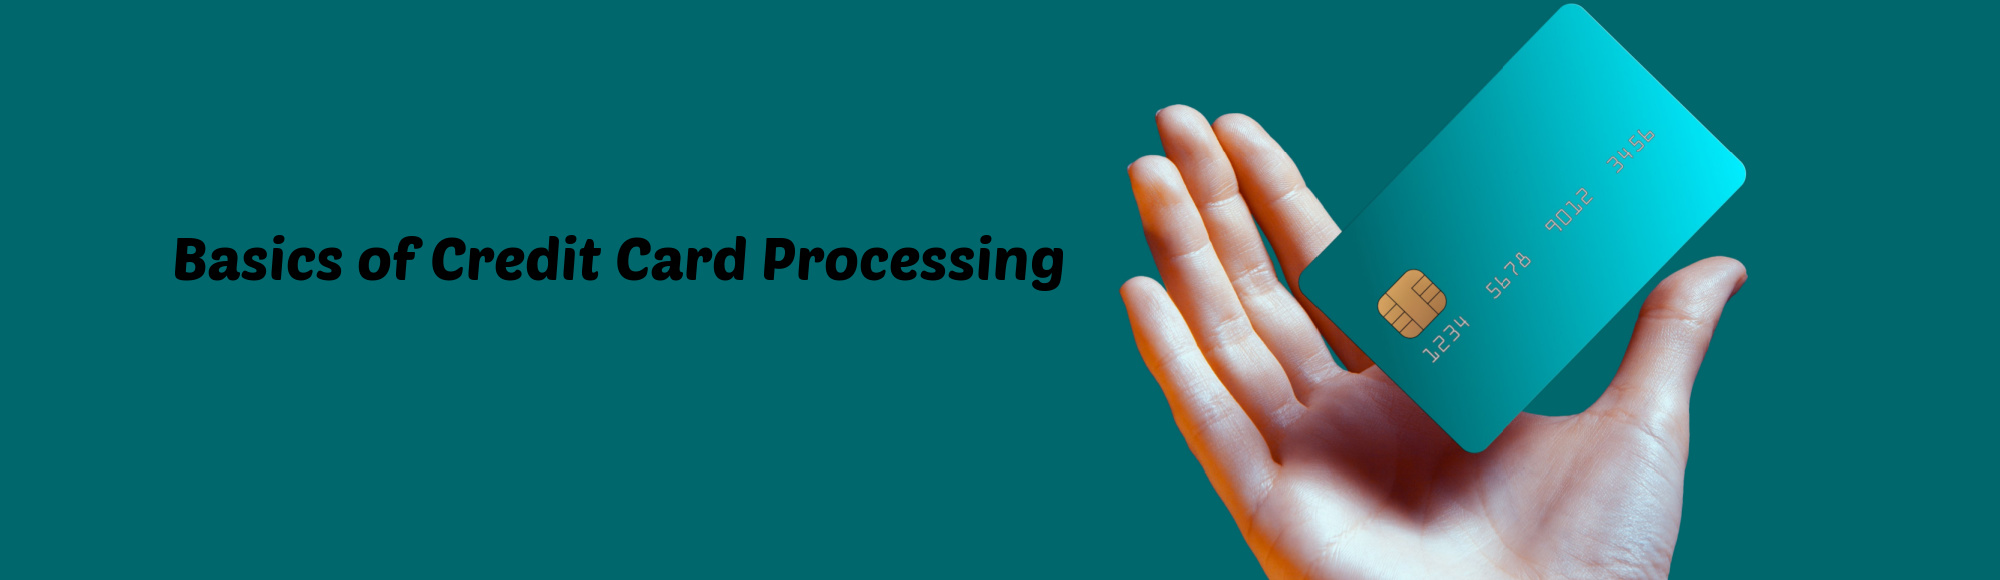 image of credit card processing basics